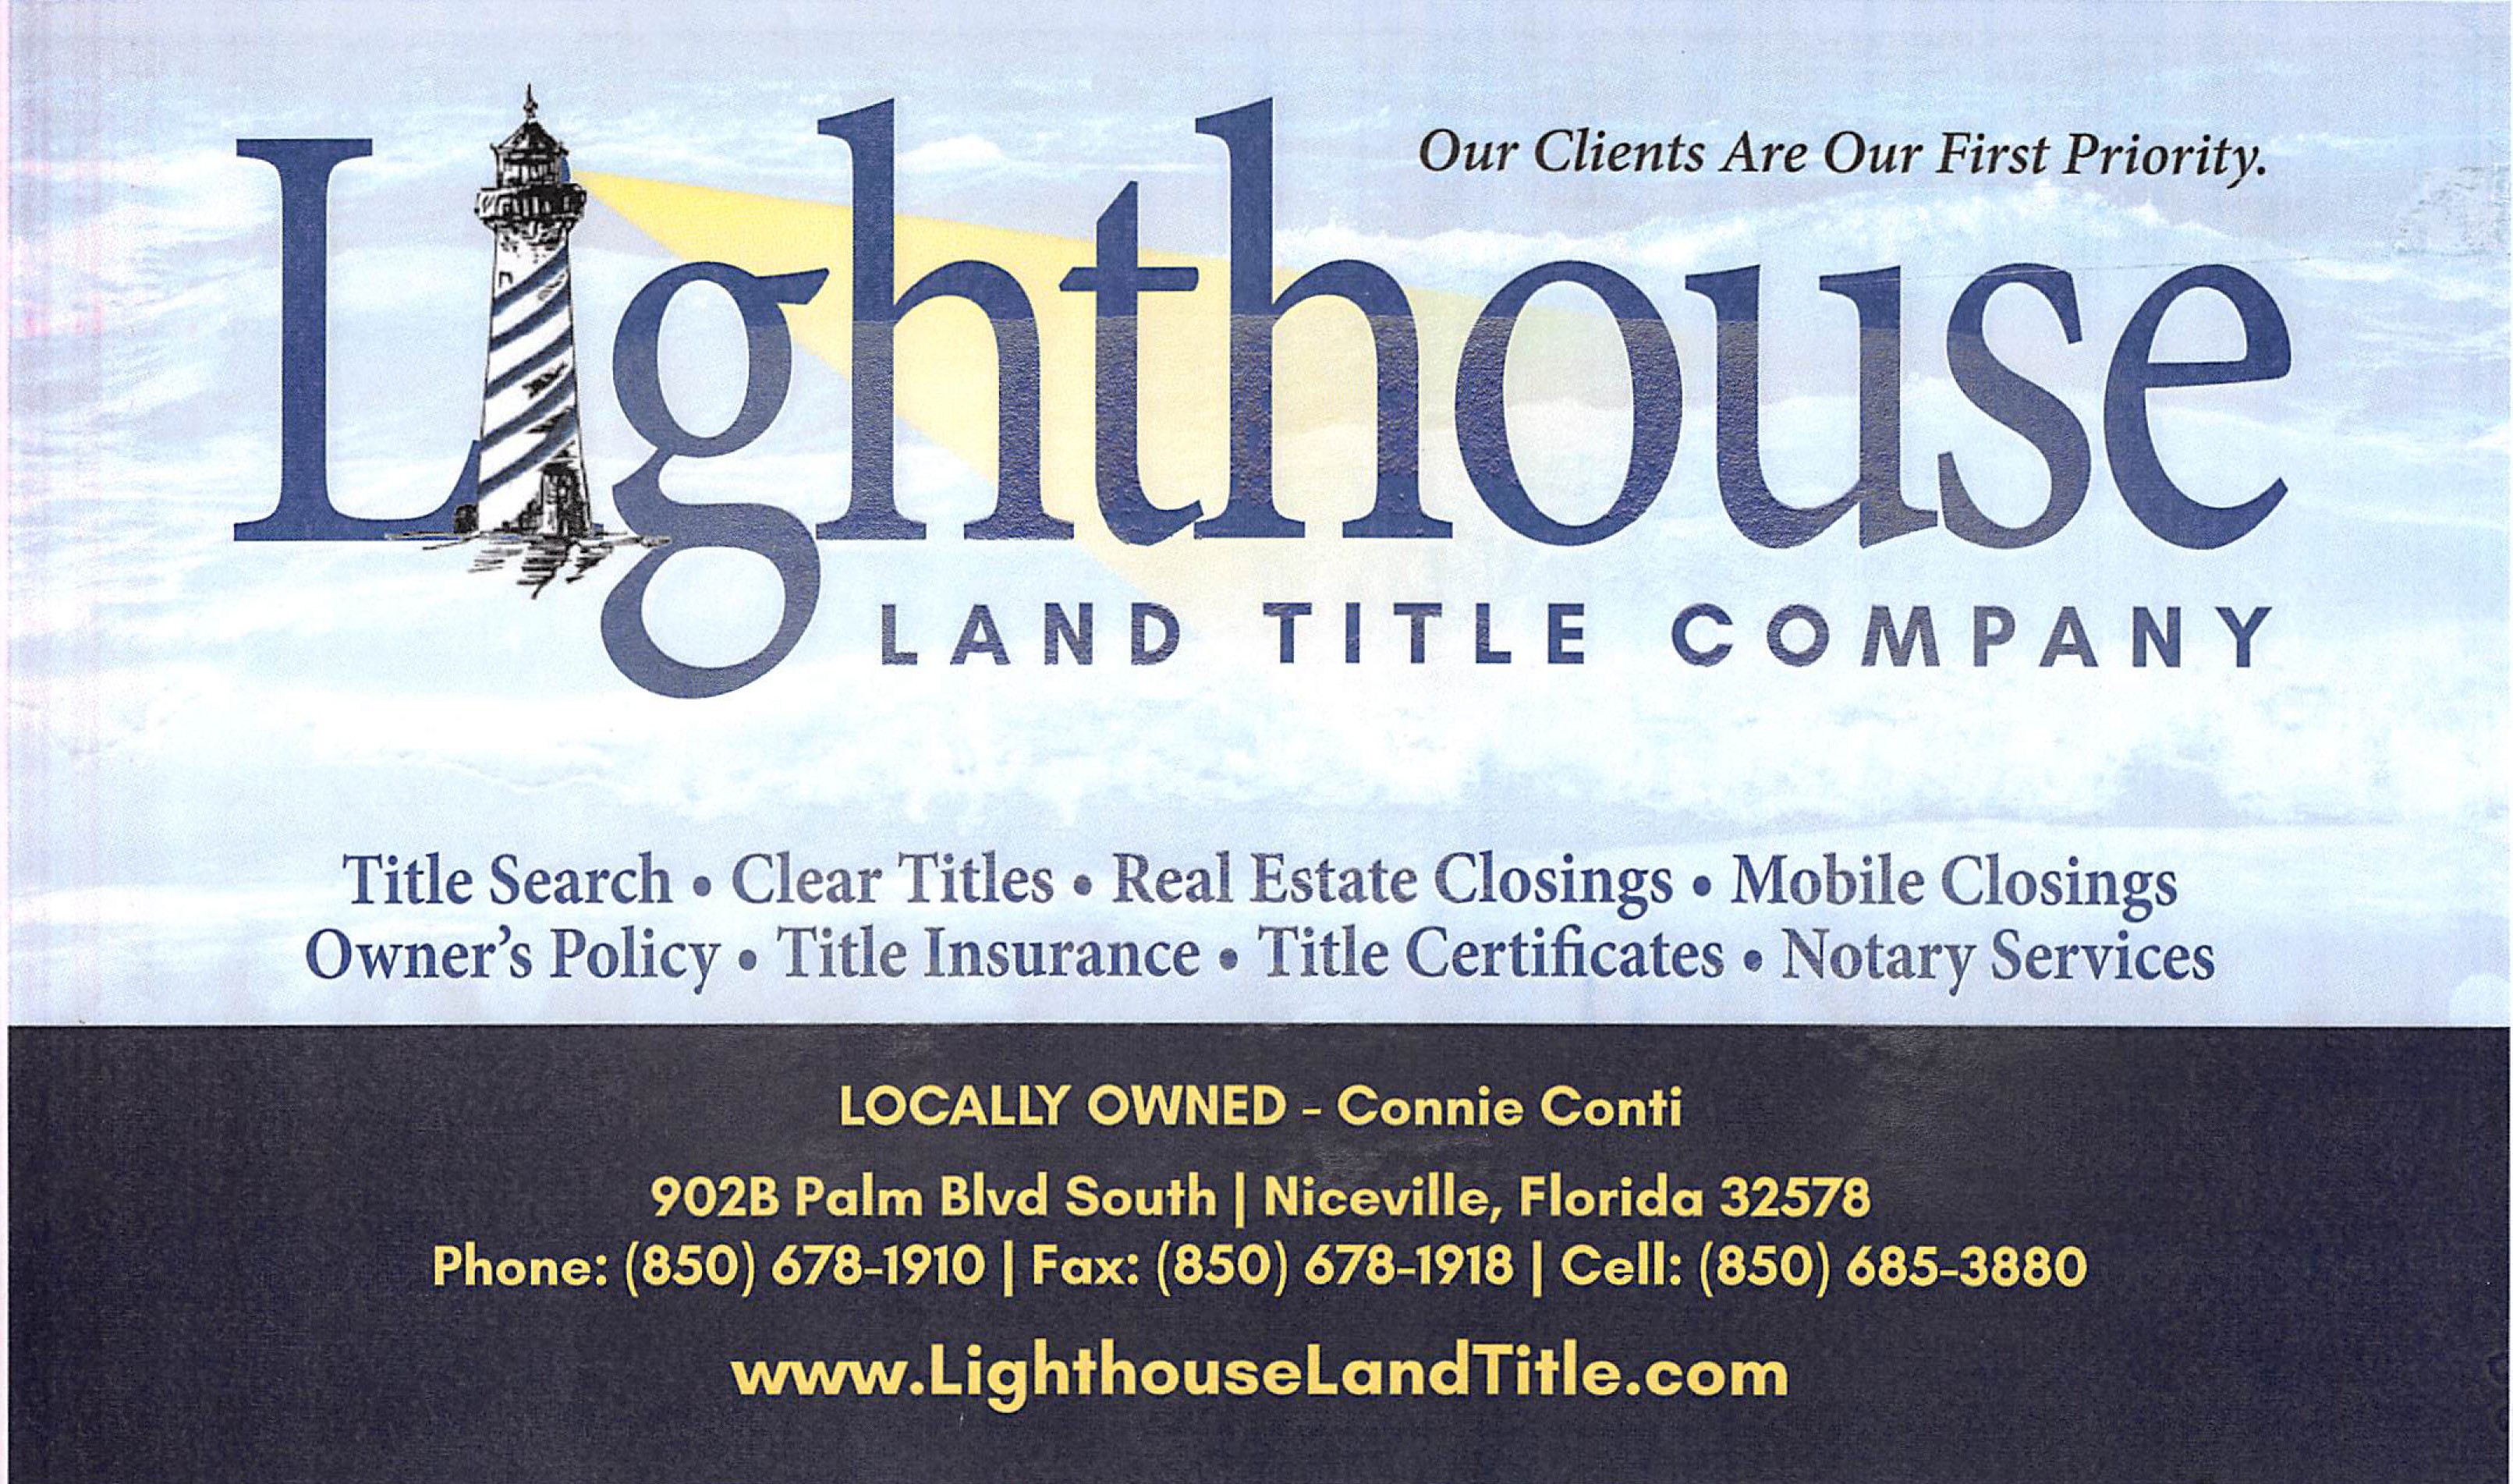 Lighthouse Land Title Company